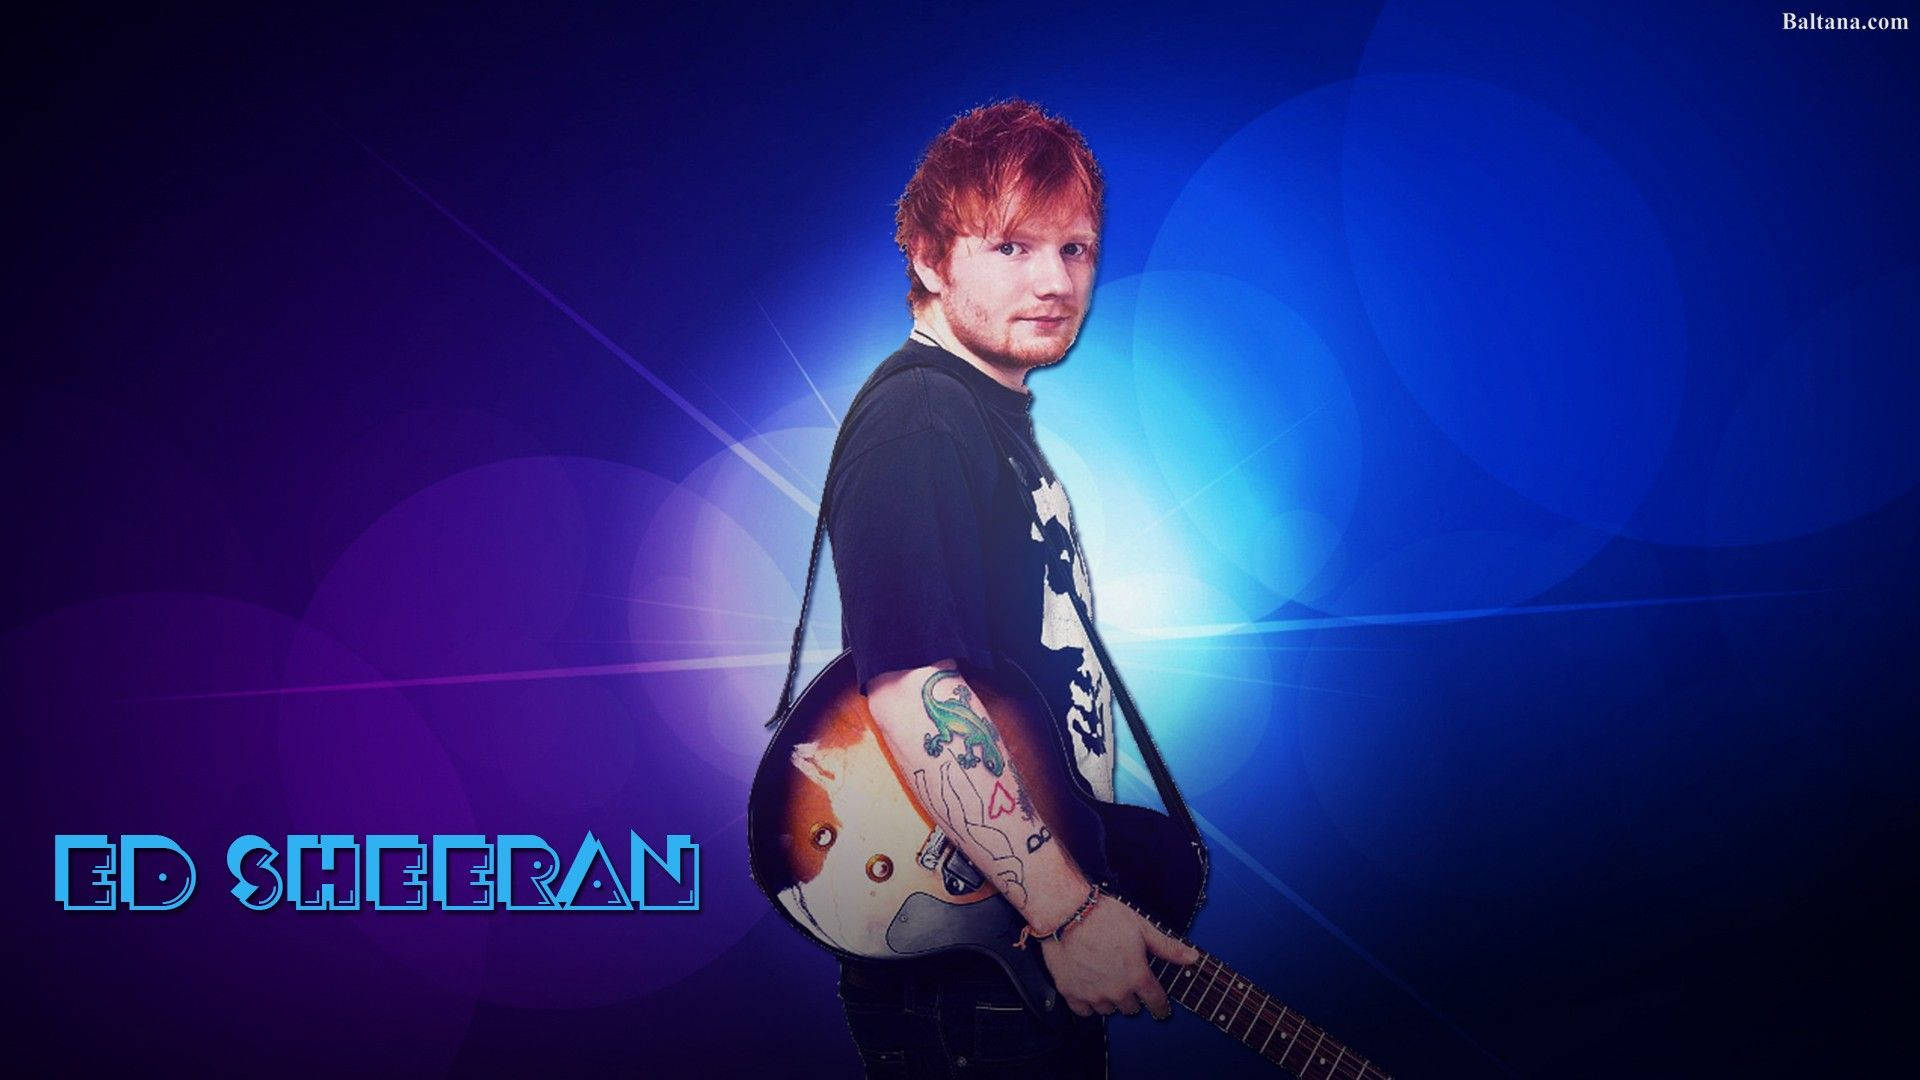 Fan Artwork Of The Beloved Artist, Ed Sheeran Background